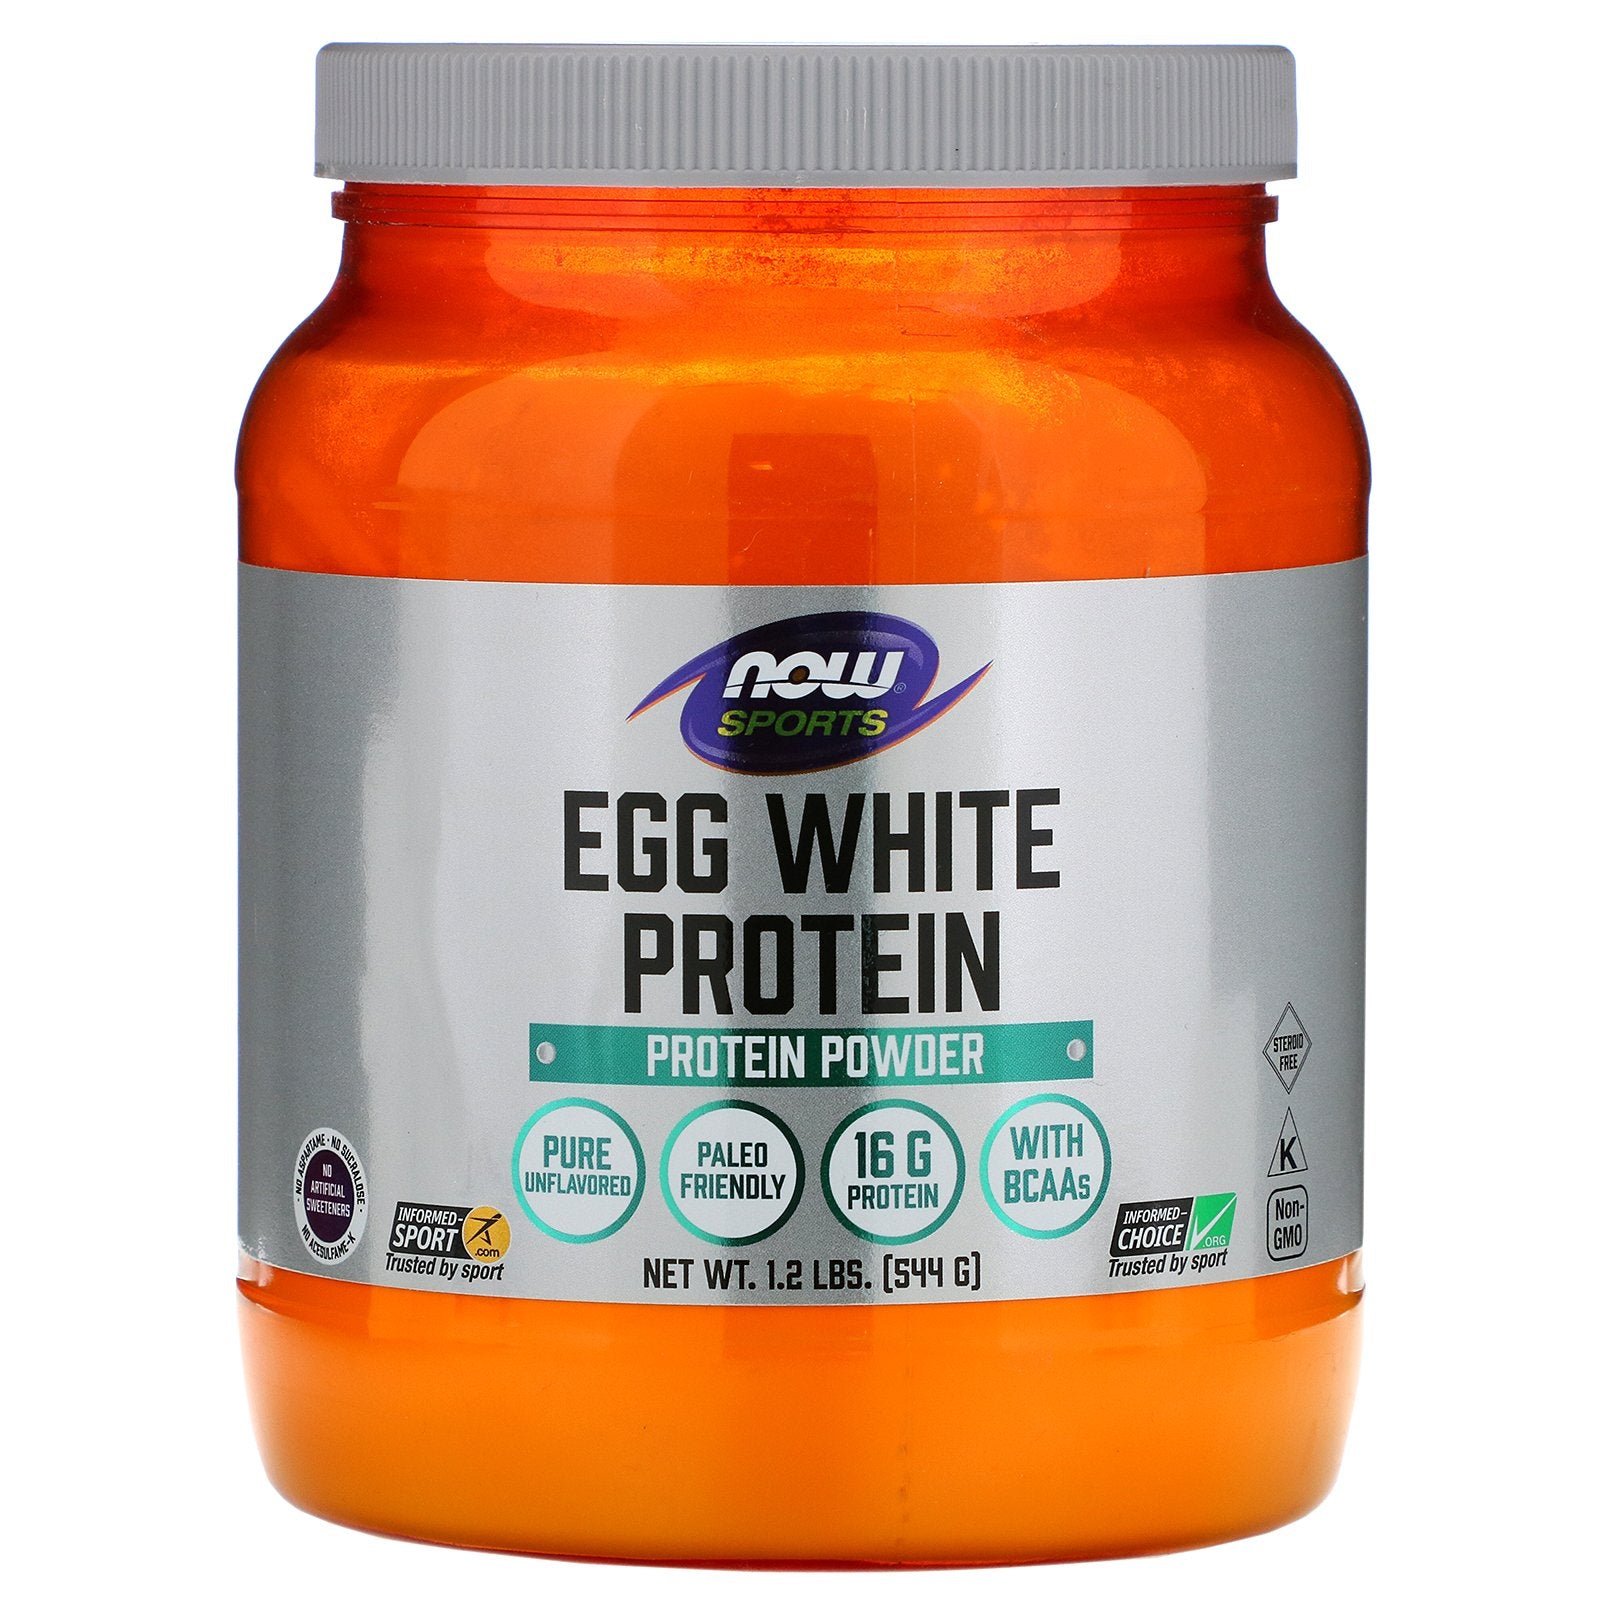 Now Foods, Sports, Egg White Protein, Protein Powder, 1.2 lbs (544 g)